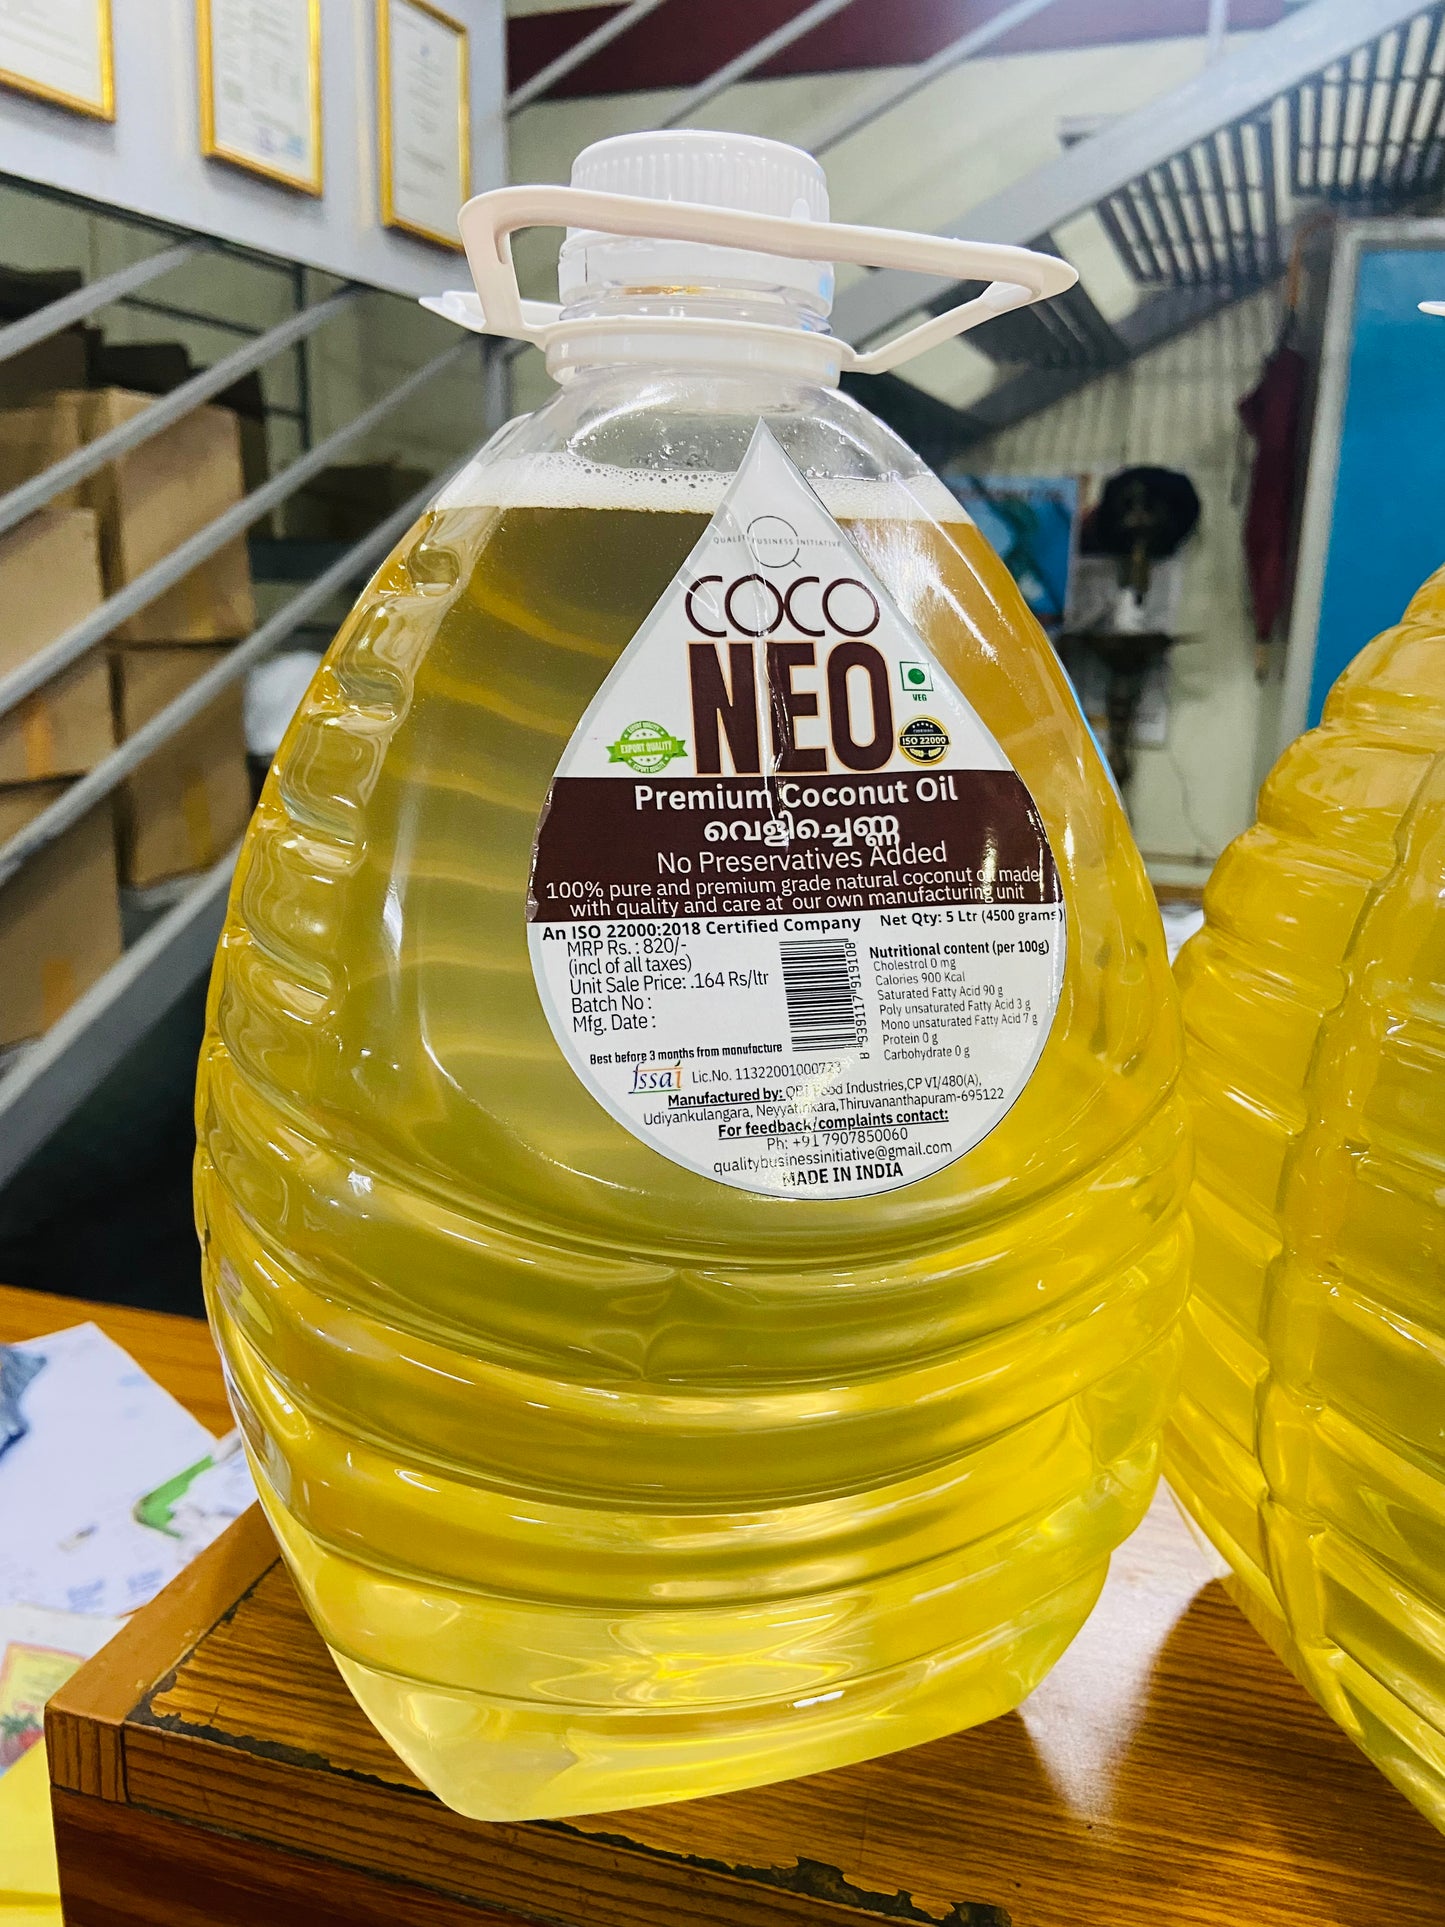 Coco Neo Premium Coconut Oil | 5 Liter Can | Onam Special Sale Pack